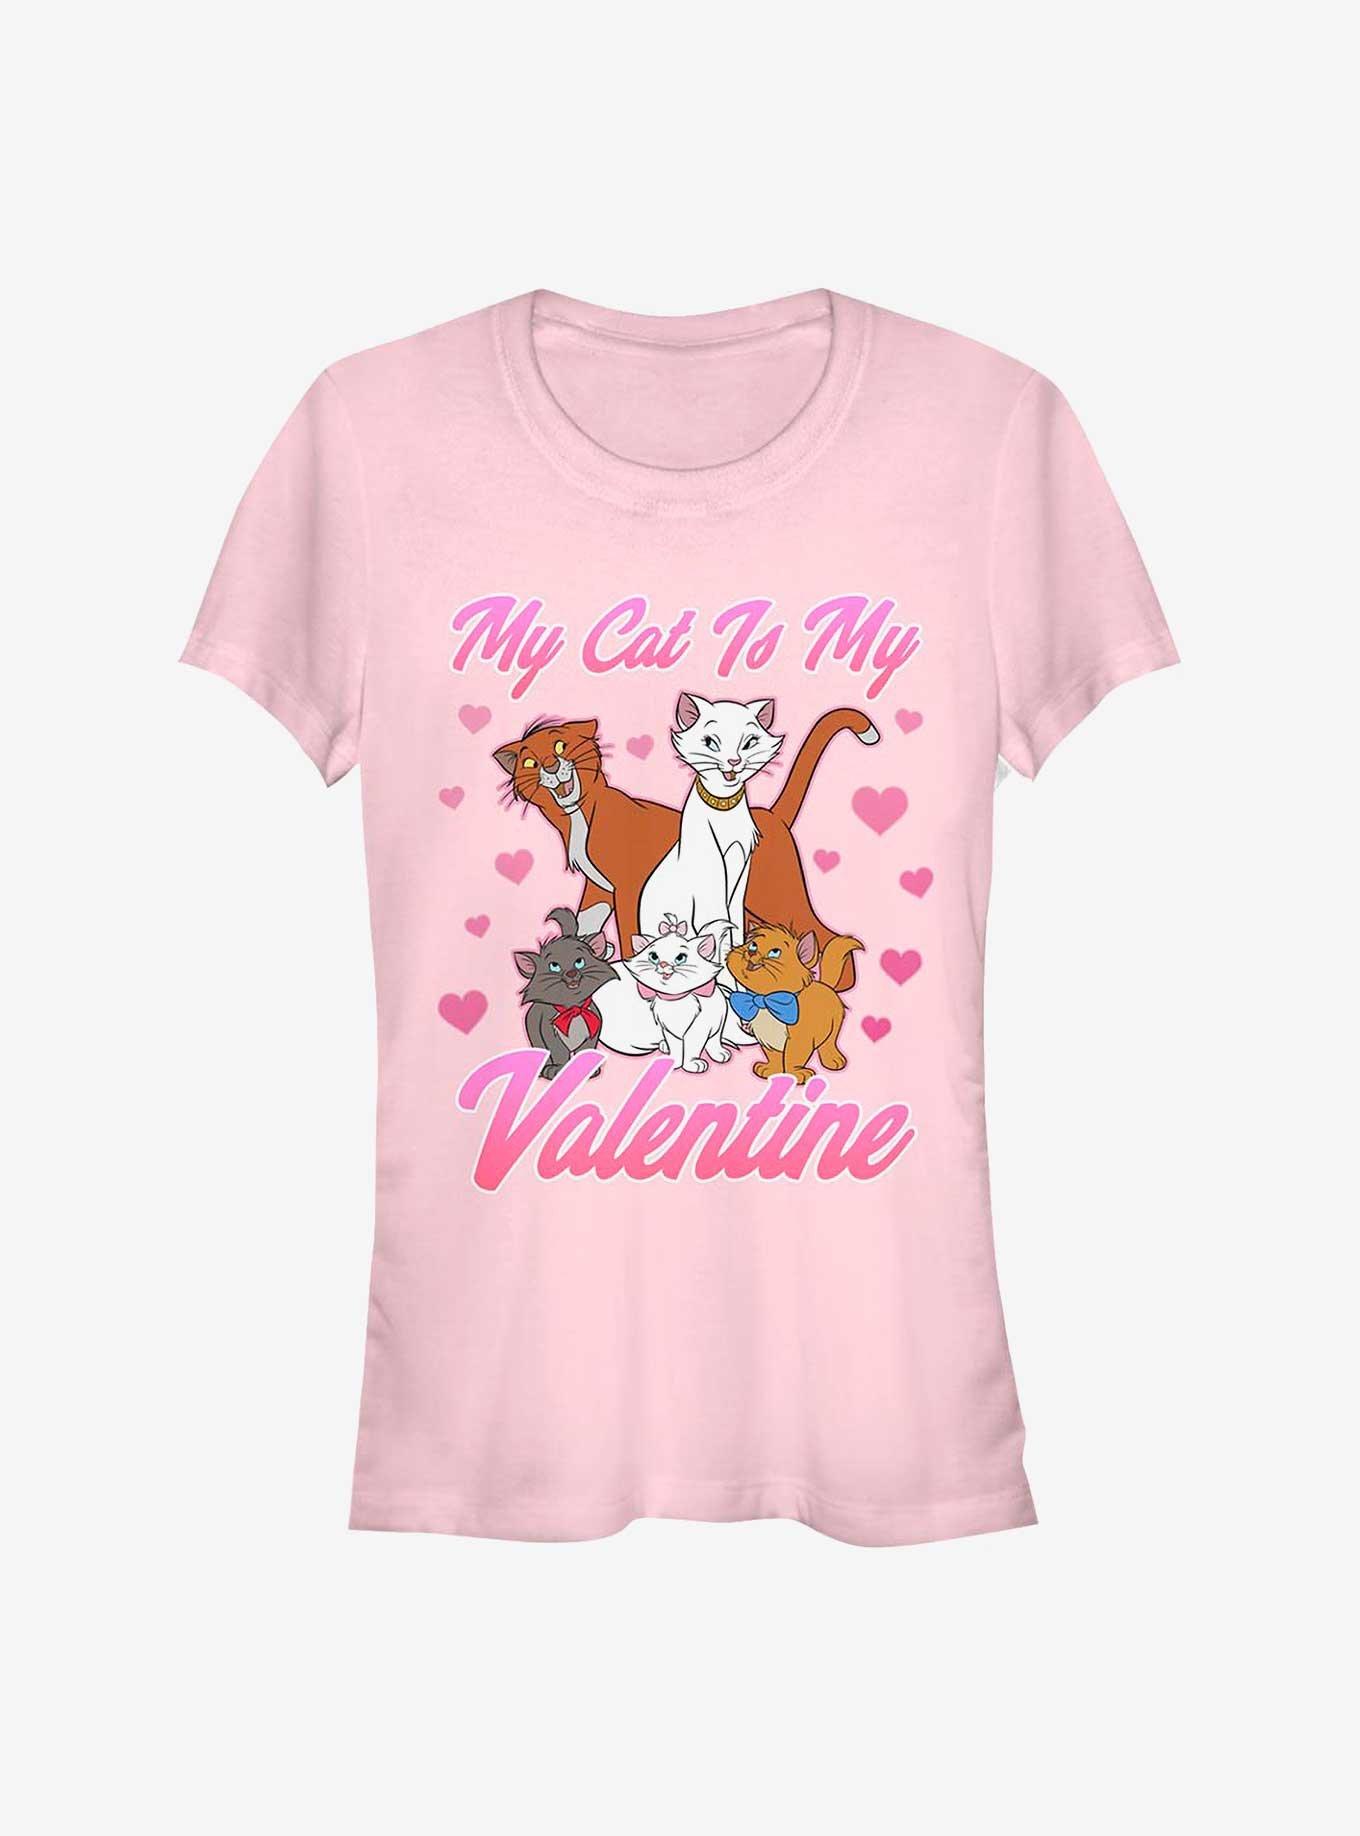 Disney The Aristocats My Cat Is My Valentine Girls T-Shirt, LIGHT PINK, hi-res